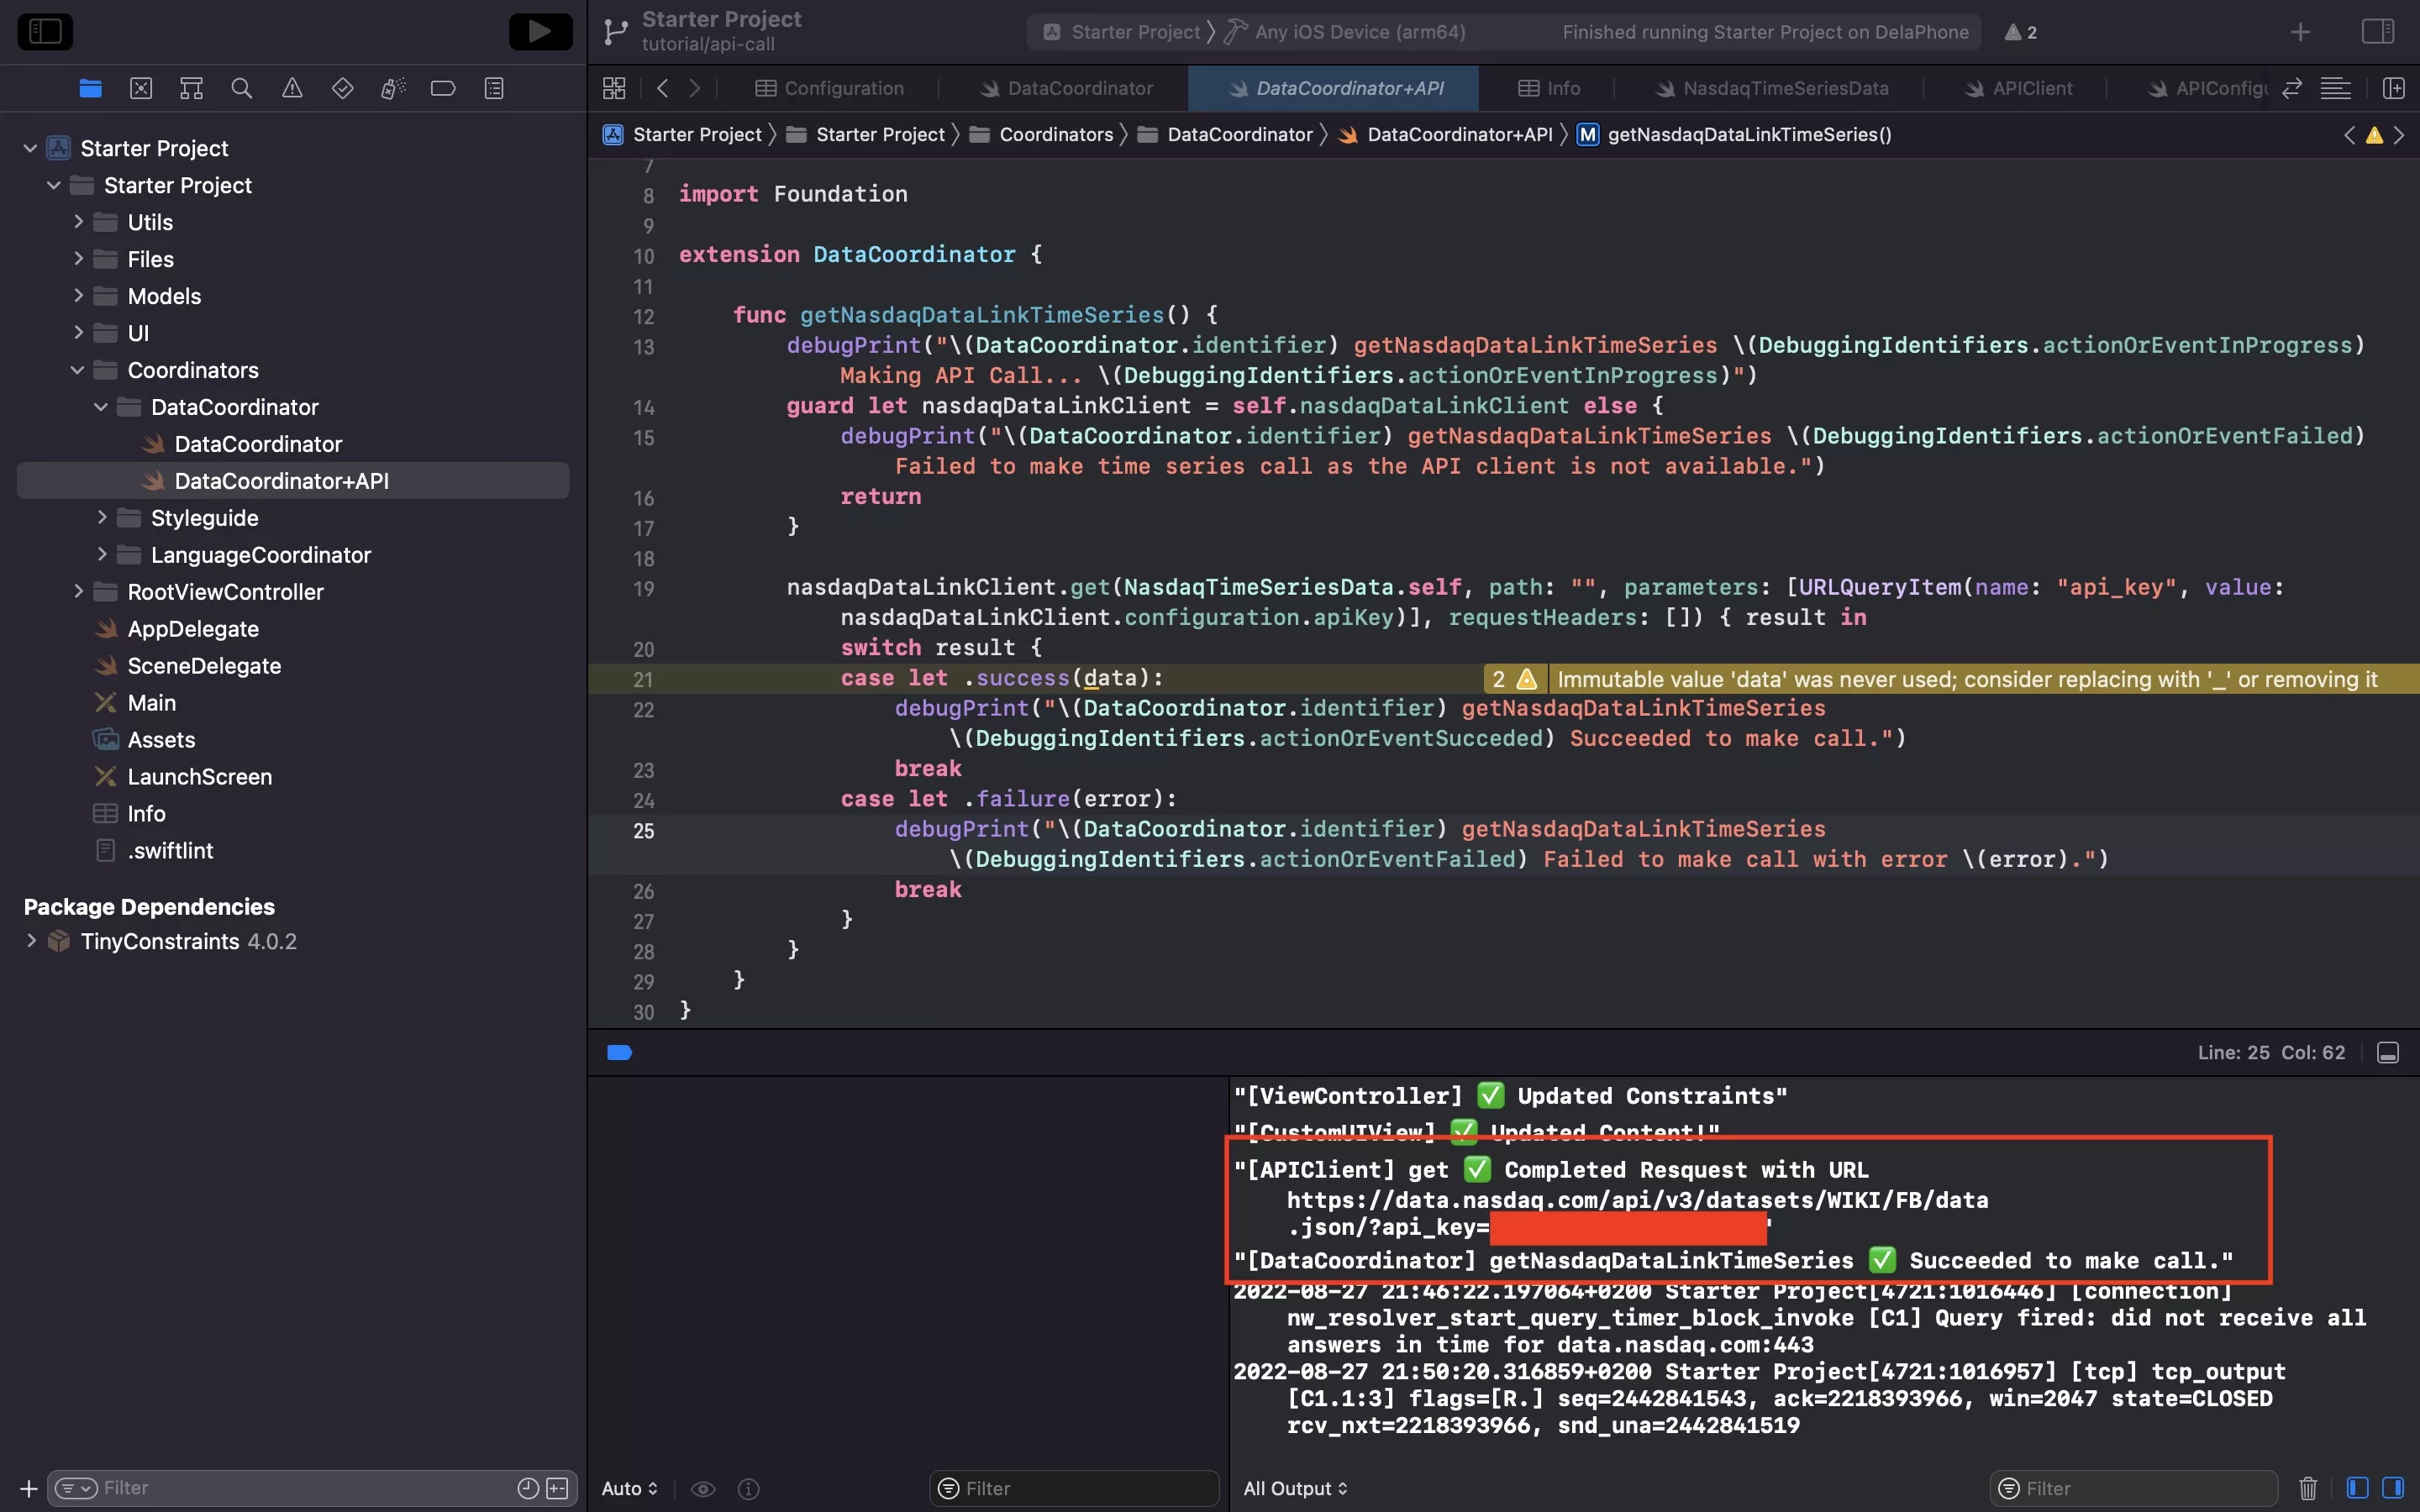 A screenshot of the code for the API call and the verification, highlighting how the XCode logs verify the API call.